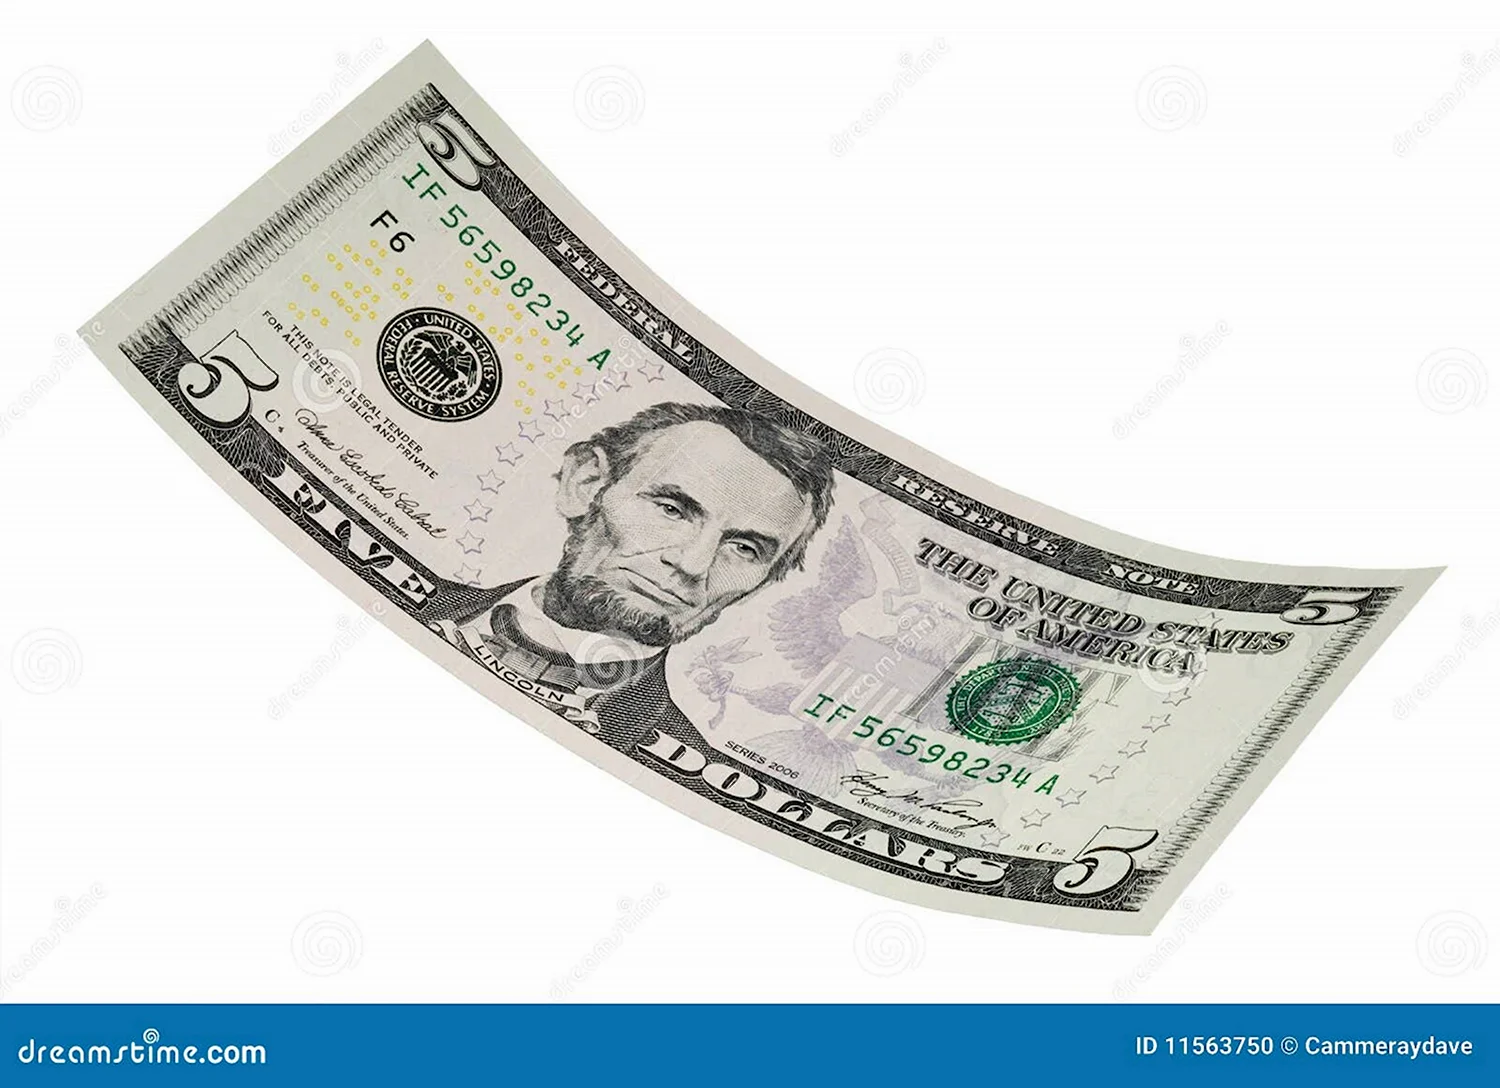 Доллар банкнота изогнутая